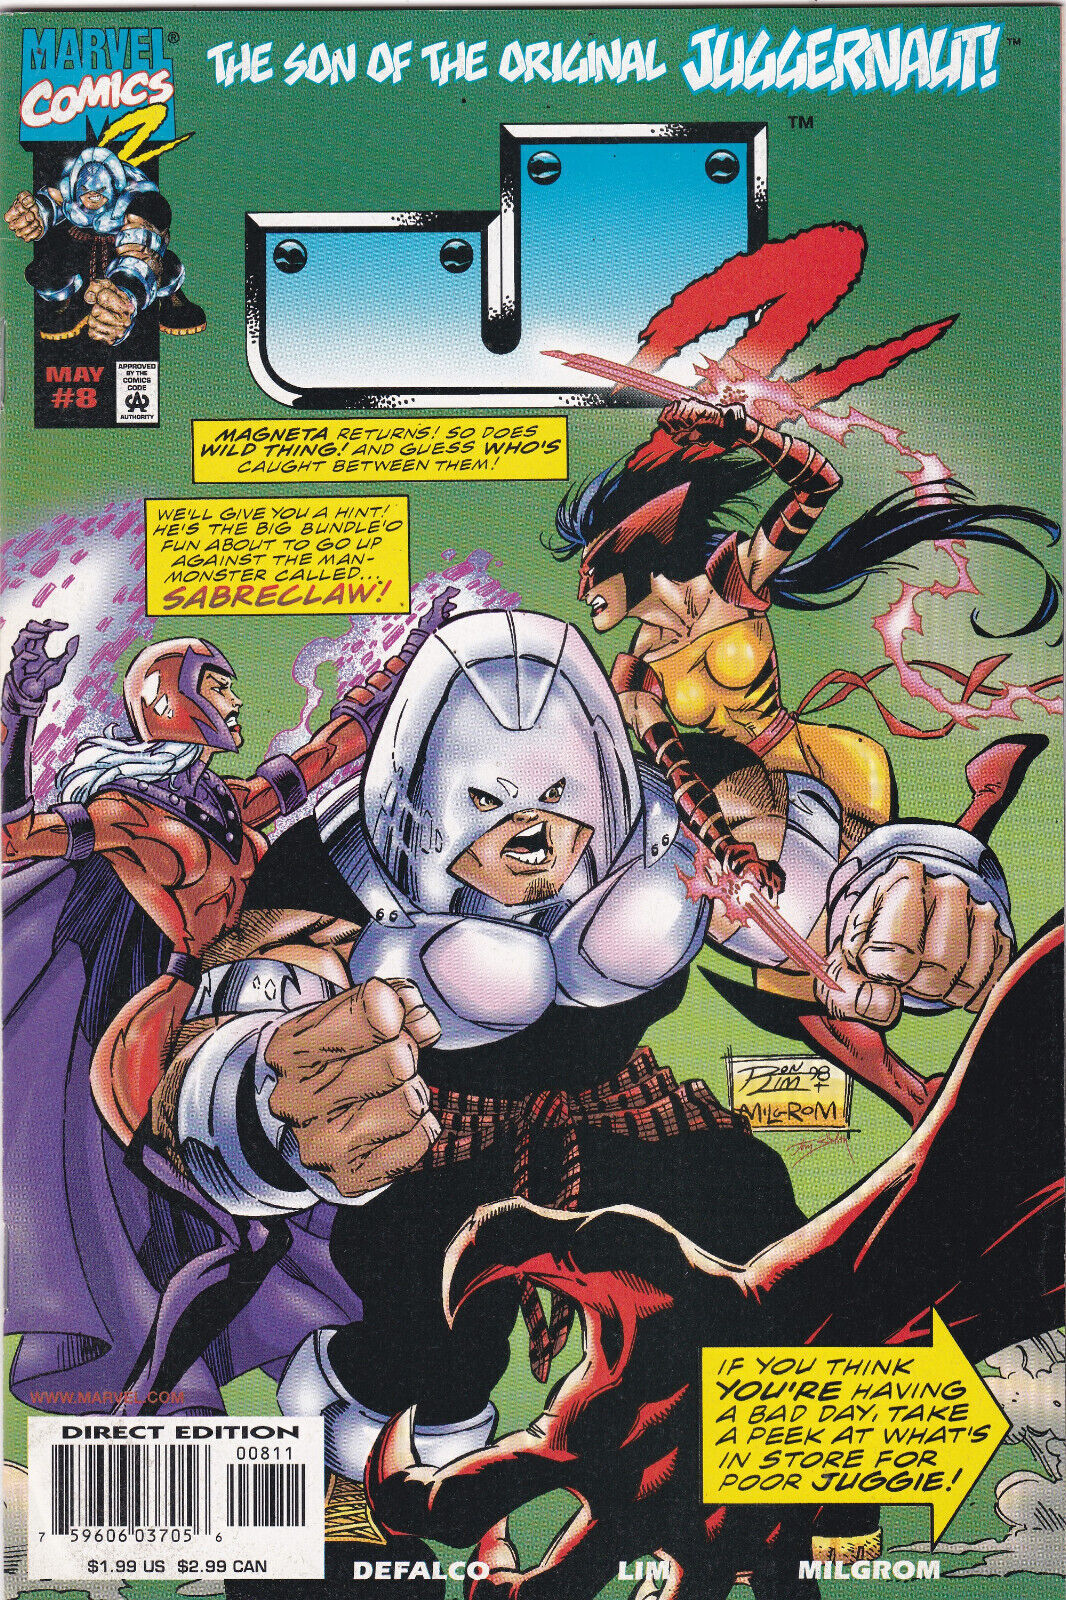 J2 #8 (Marvel, May 1998) Son of the Original Juggernaut DeFalco, Lim & Milgrom